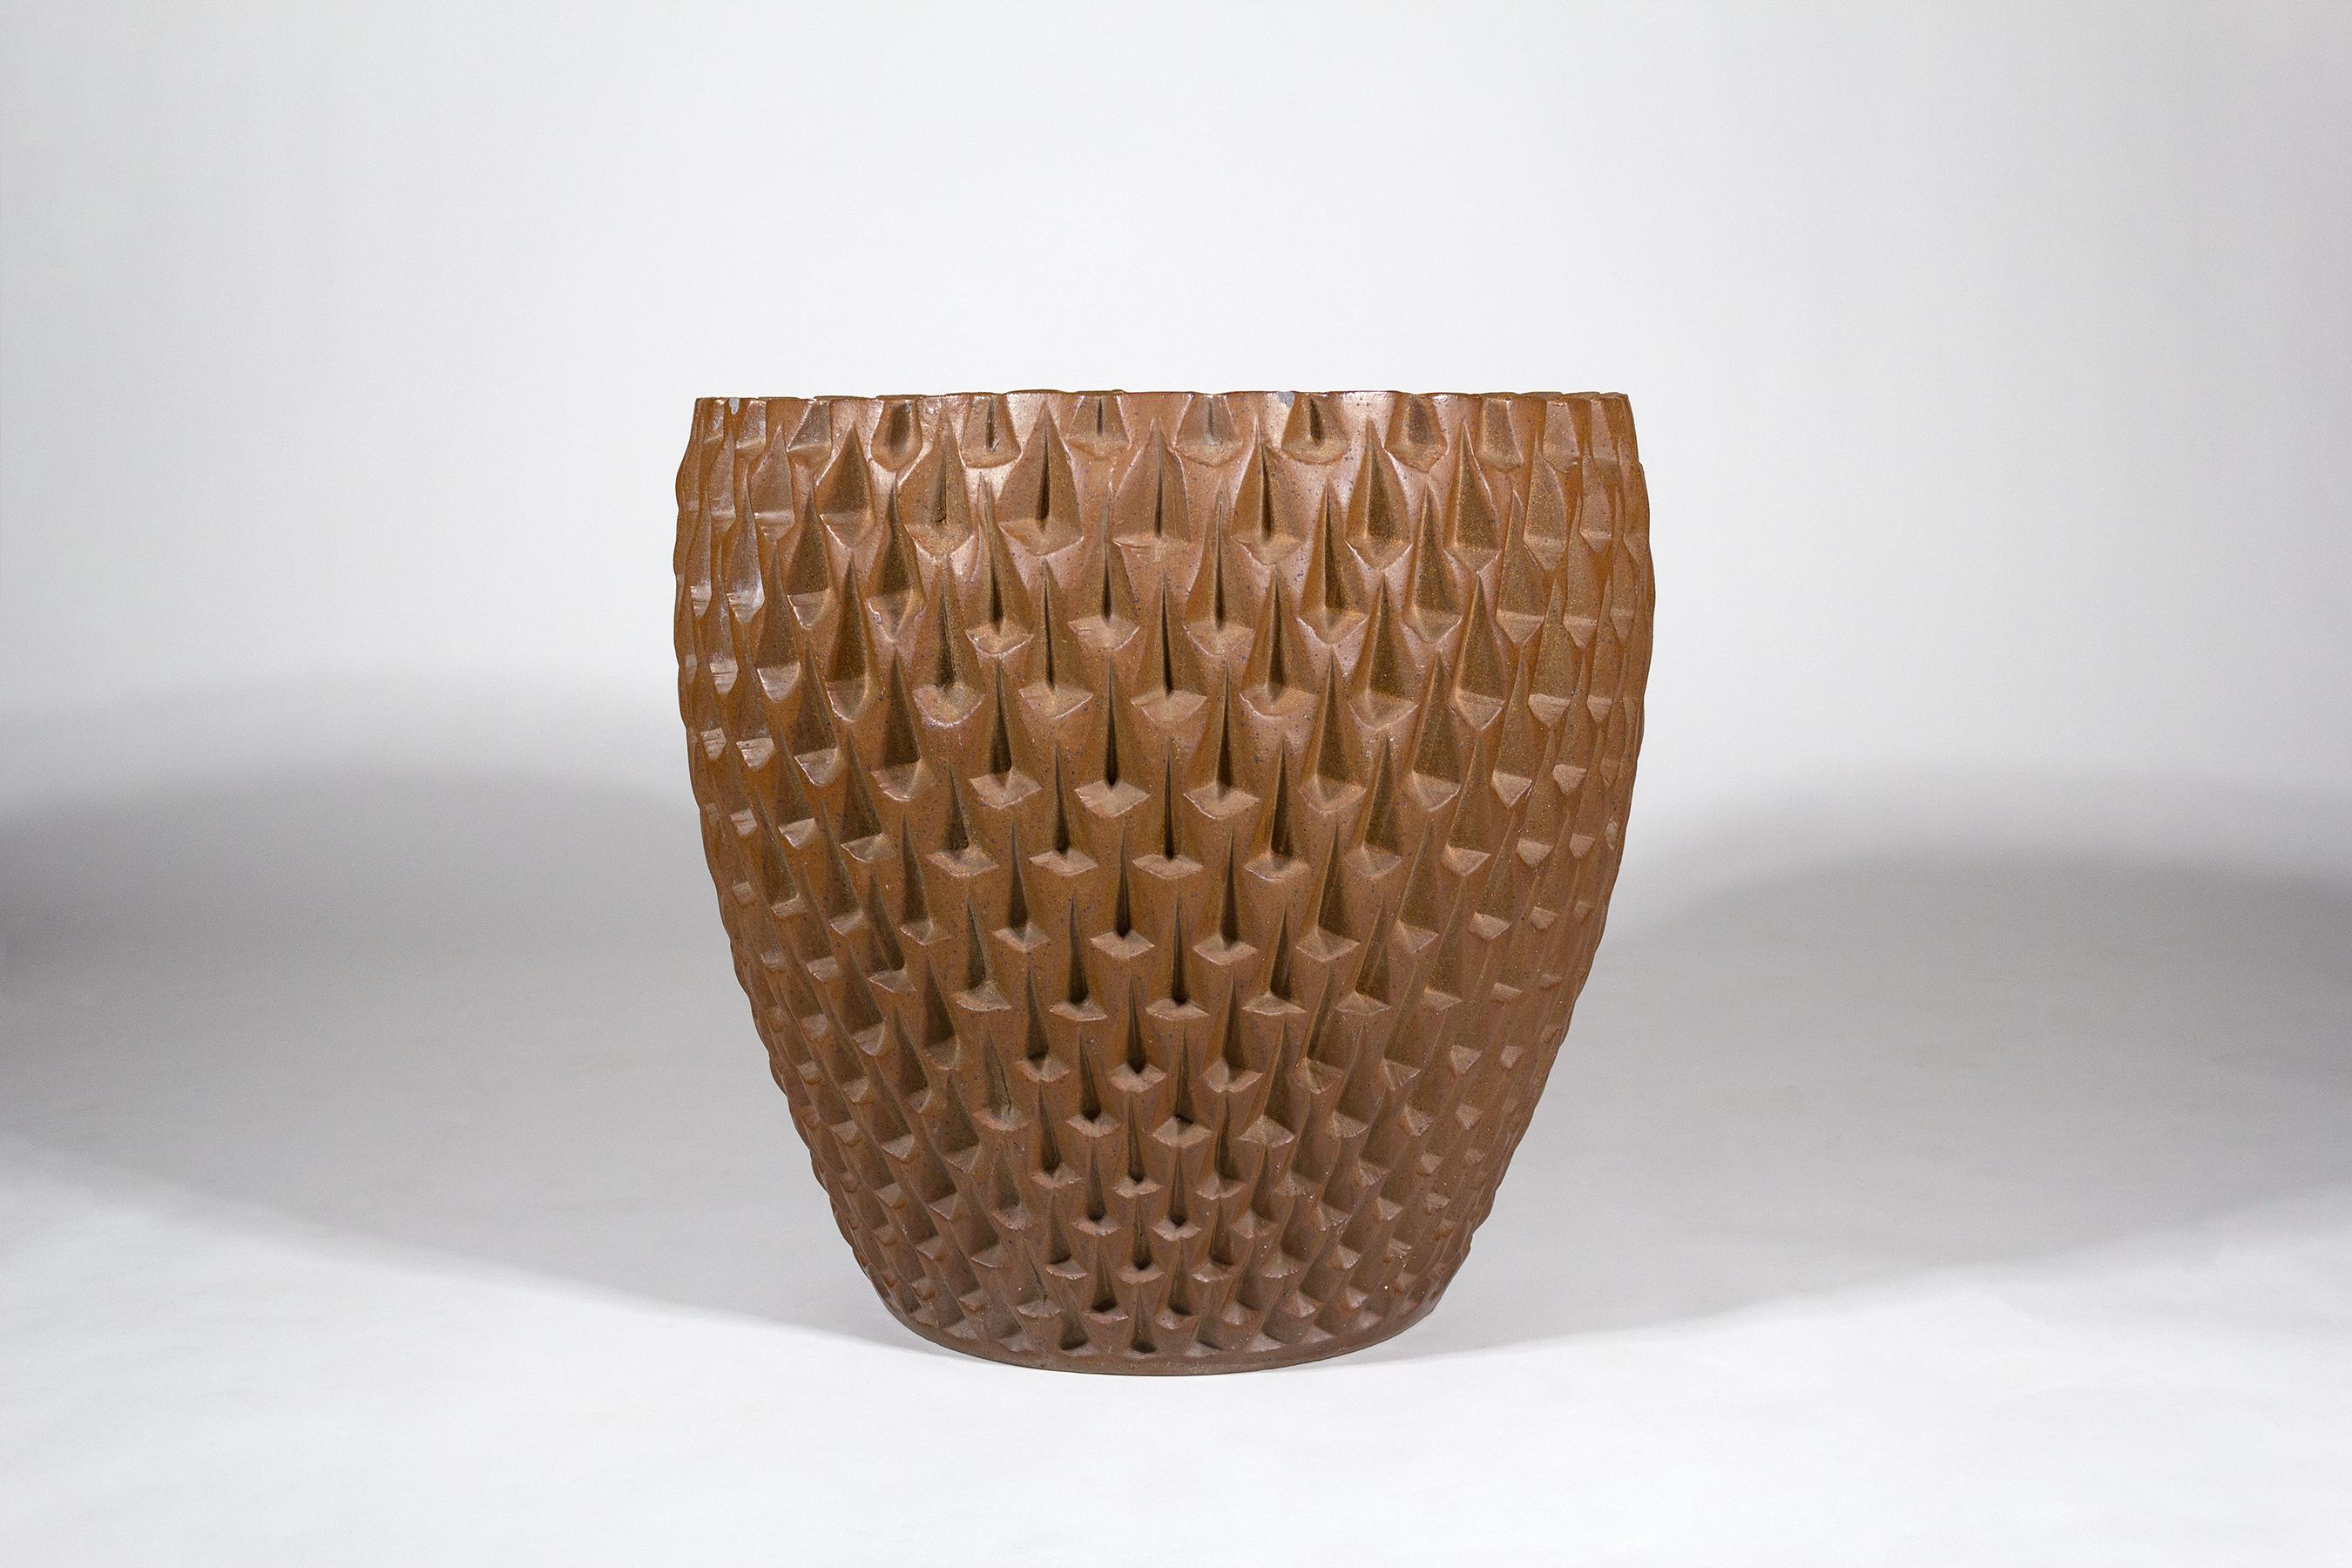 Phoenix-1 stoneware planter designed by David Cressey for Architectural Pottery Unglazed version measuring 24